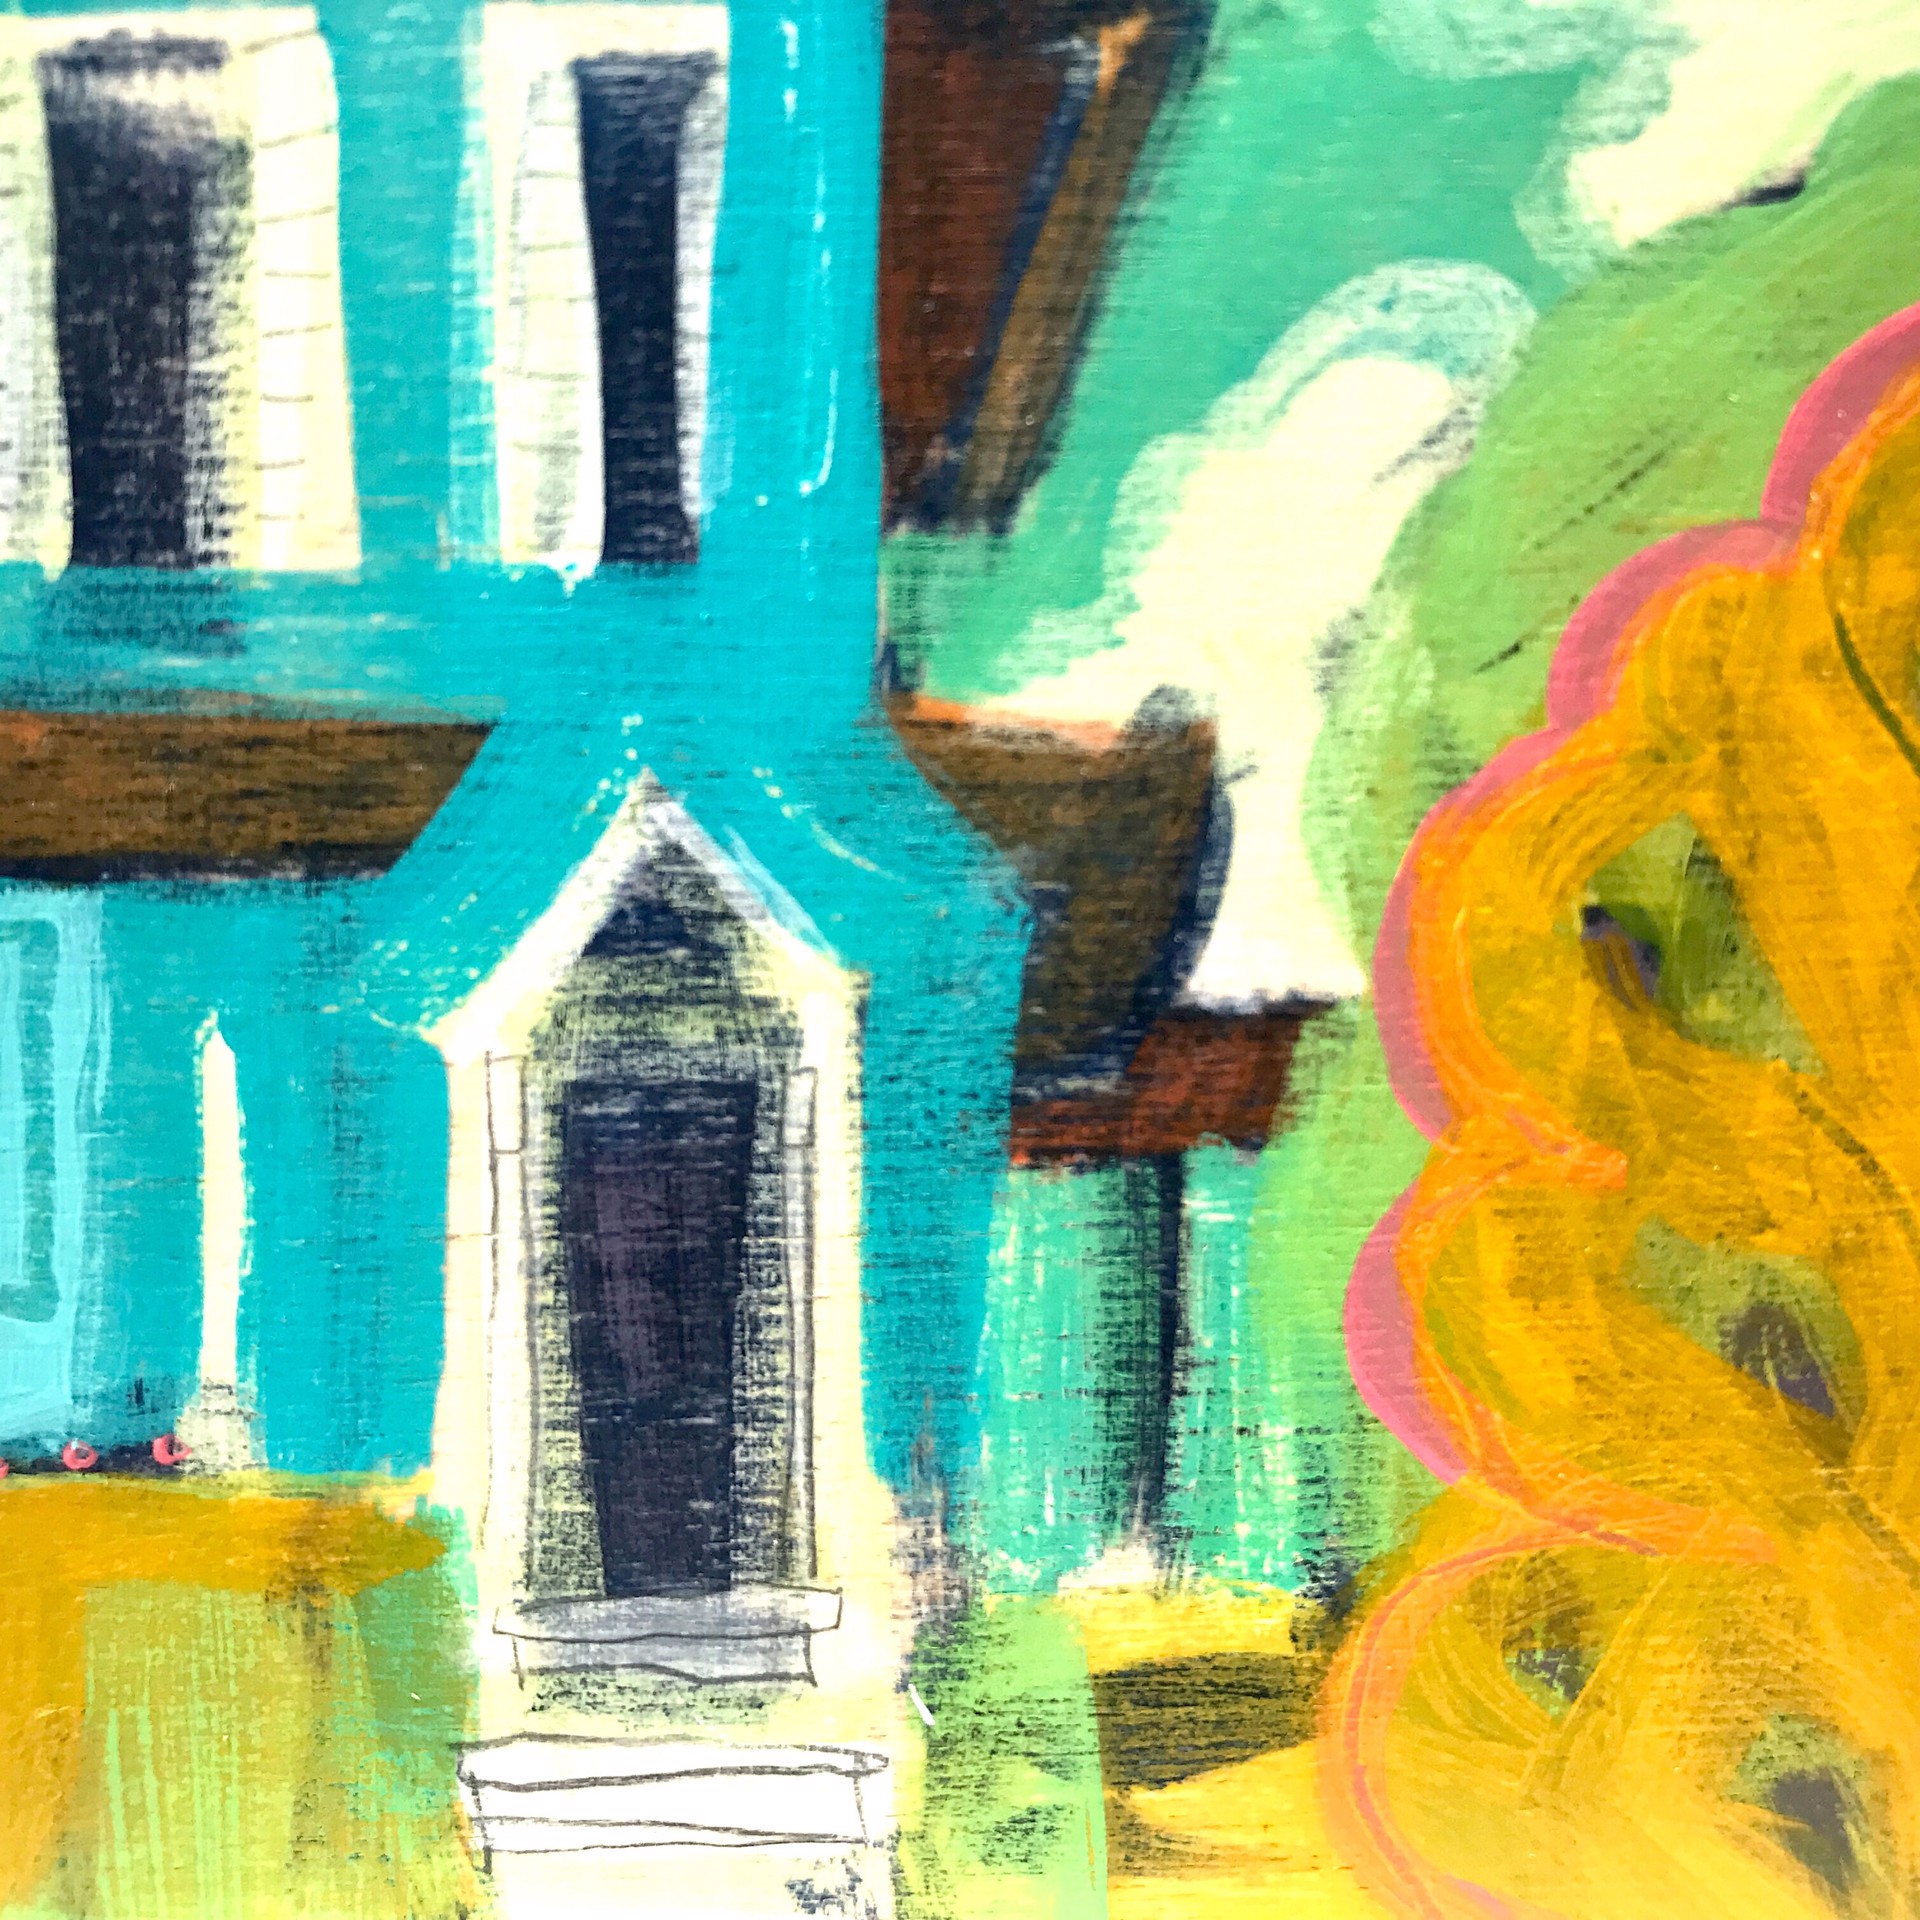 Teal House on Main St. by Rachael Van Dyke